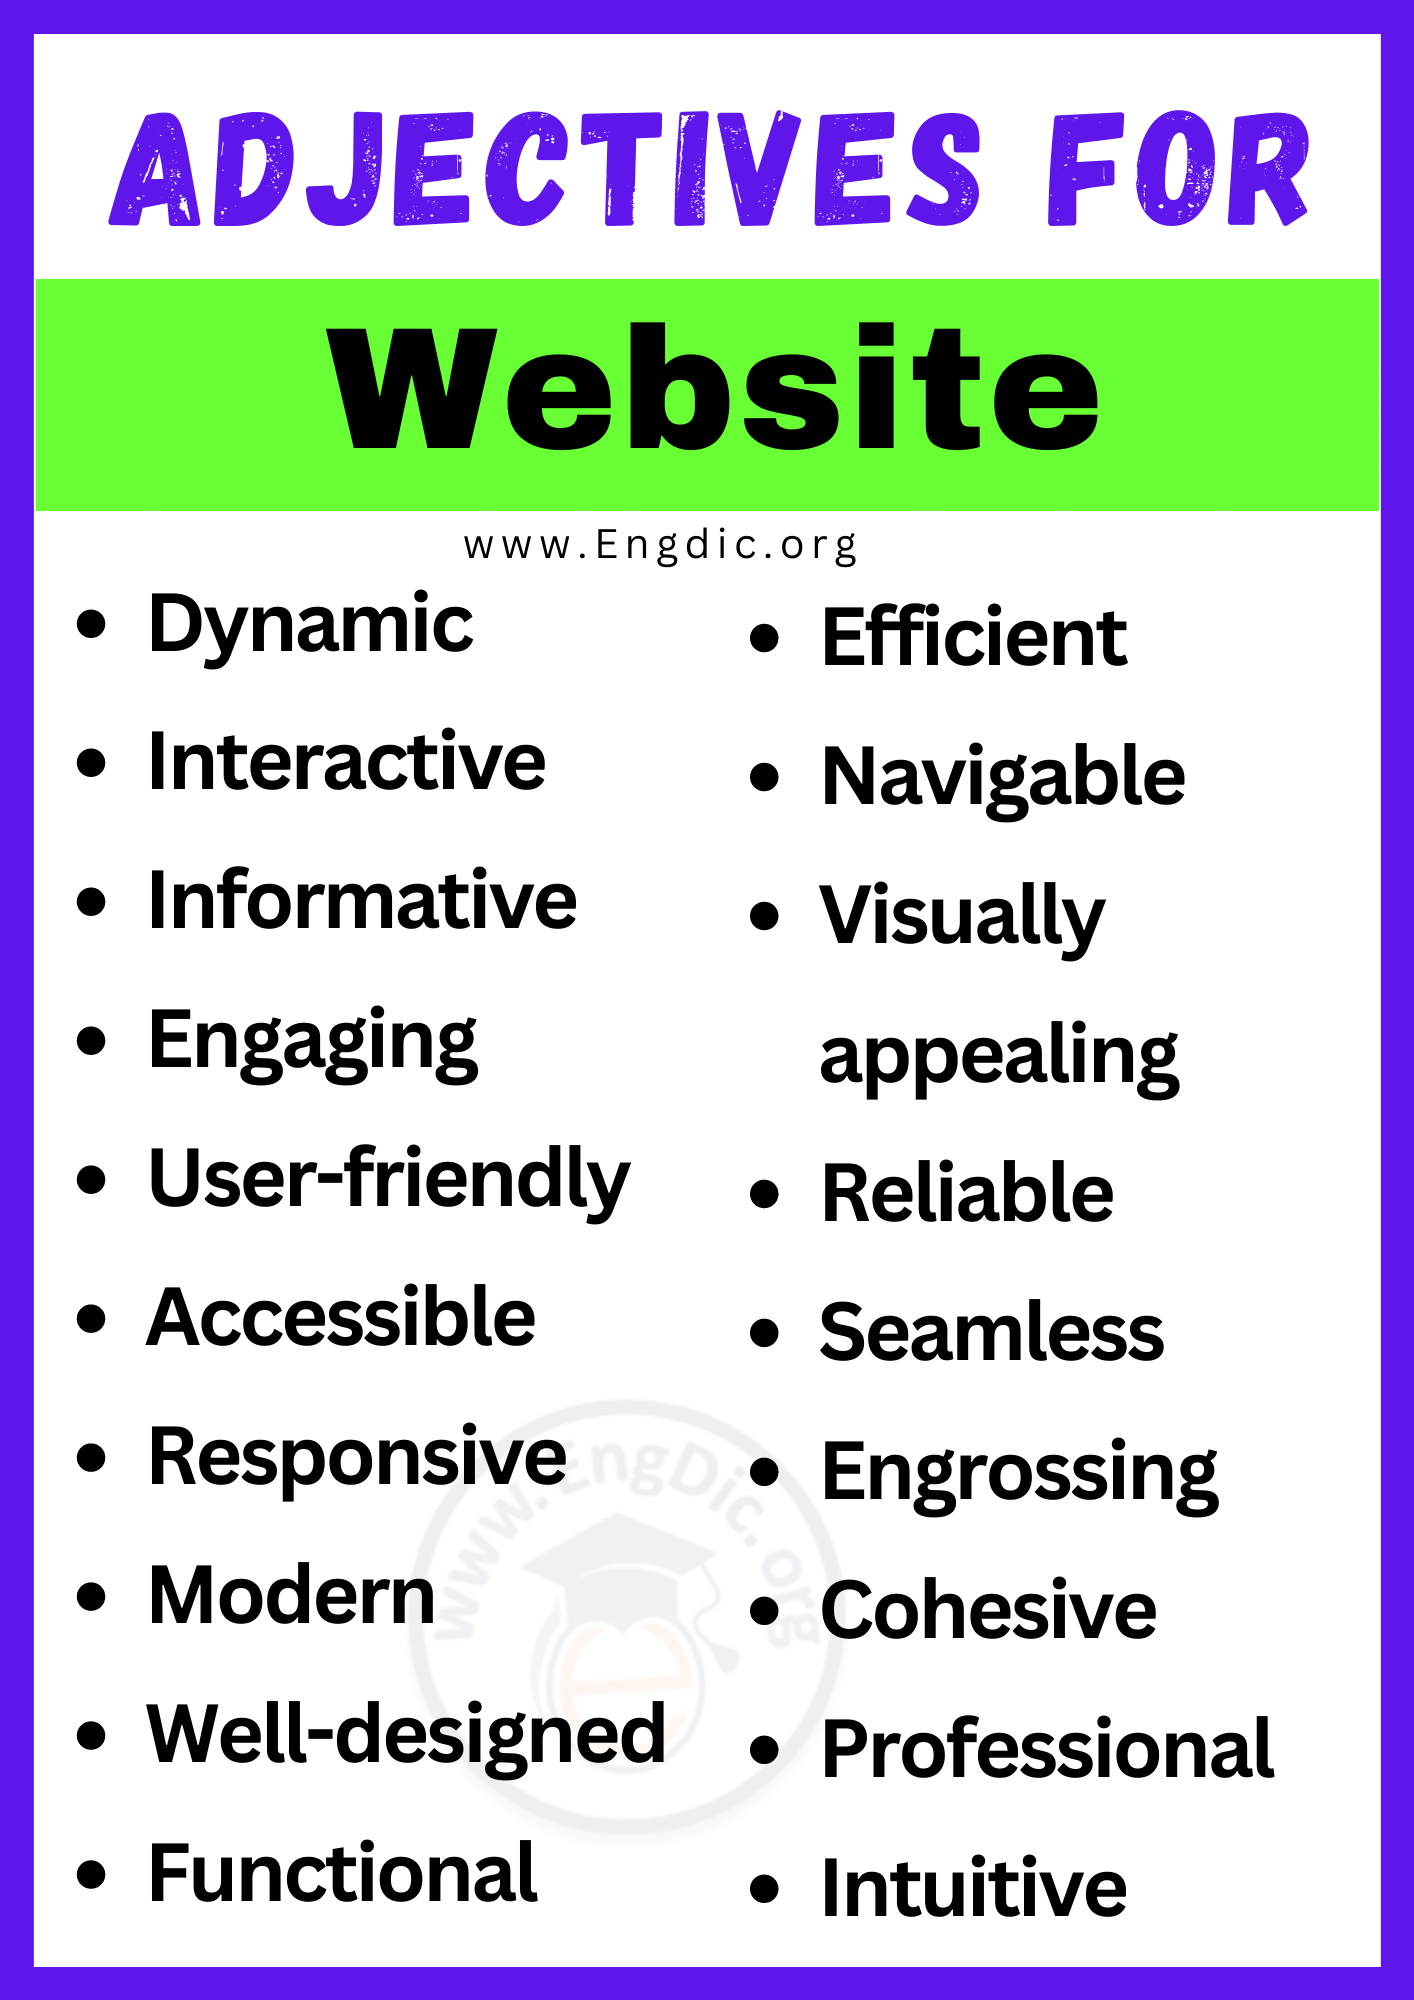 Adjectives for Website